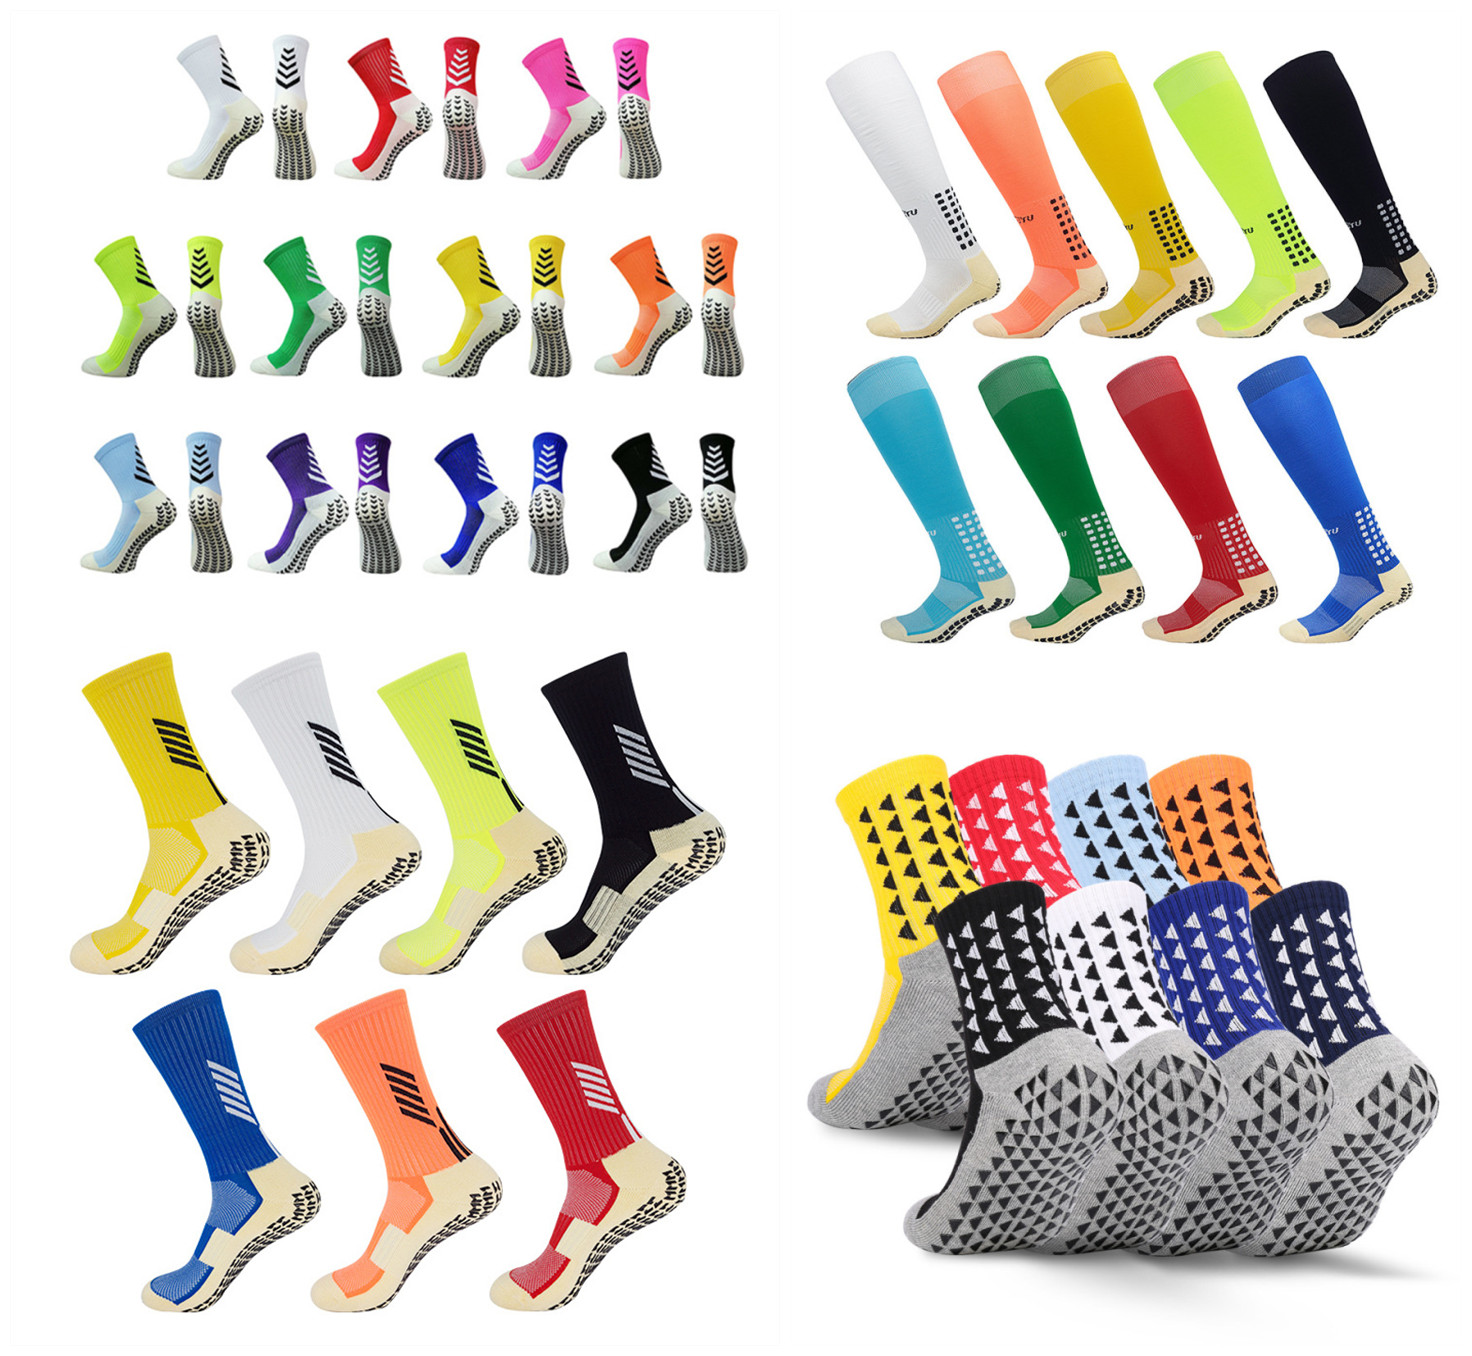  antislip football socks    grip football socks   custom football socks